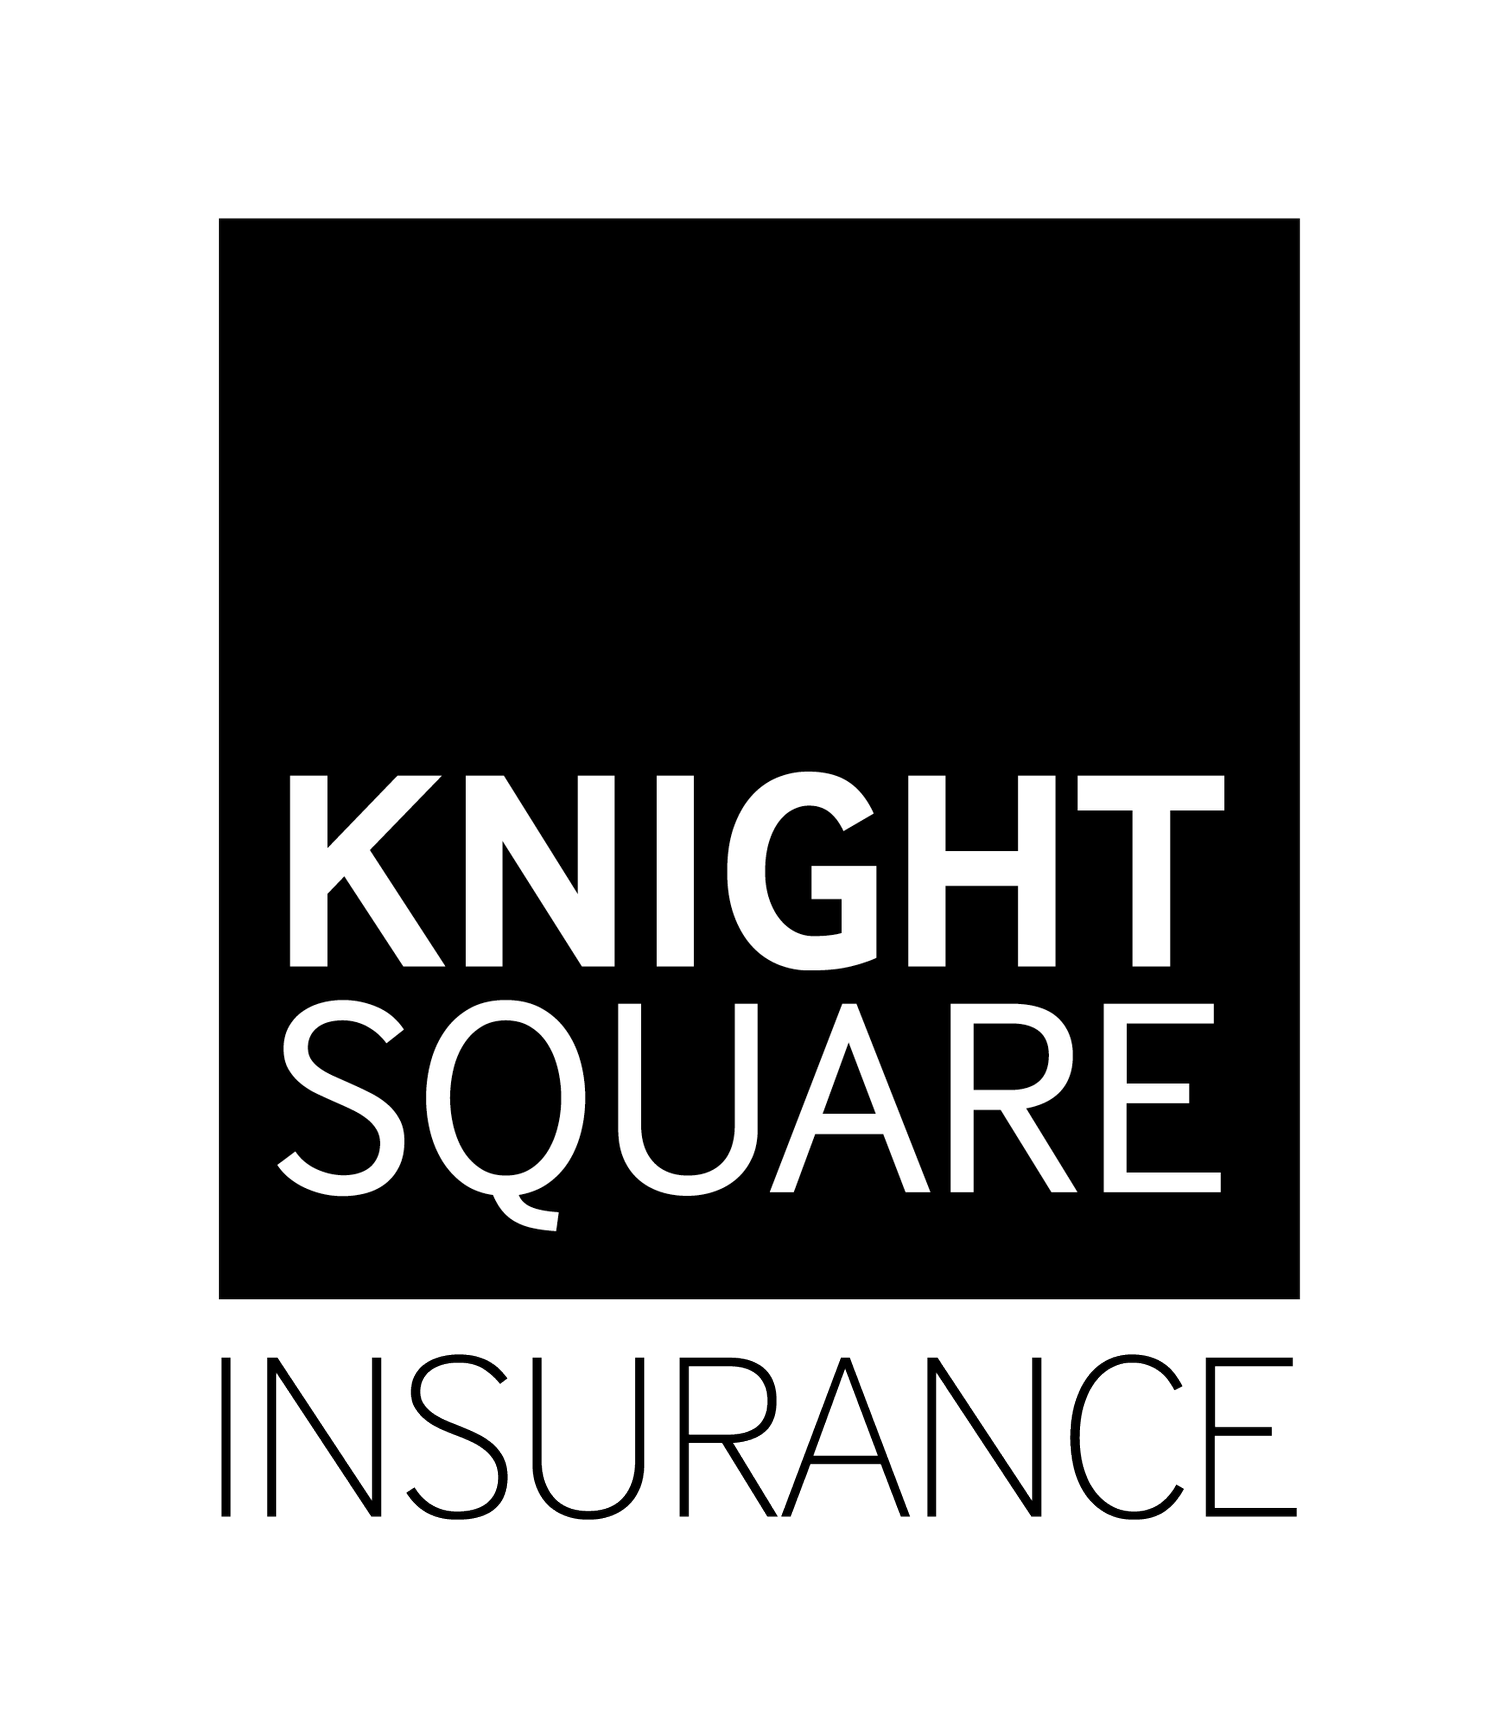 Knight Square Insurance